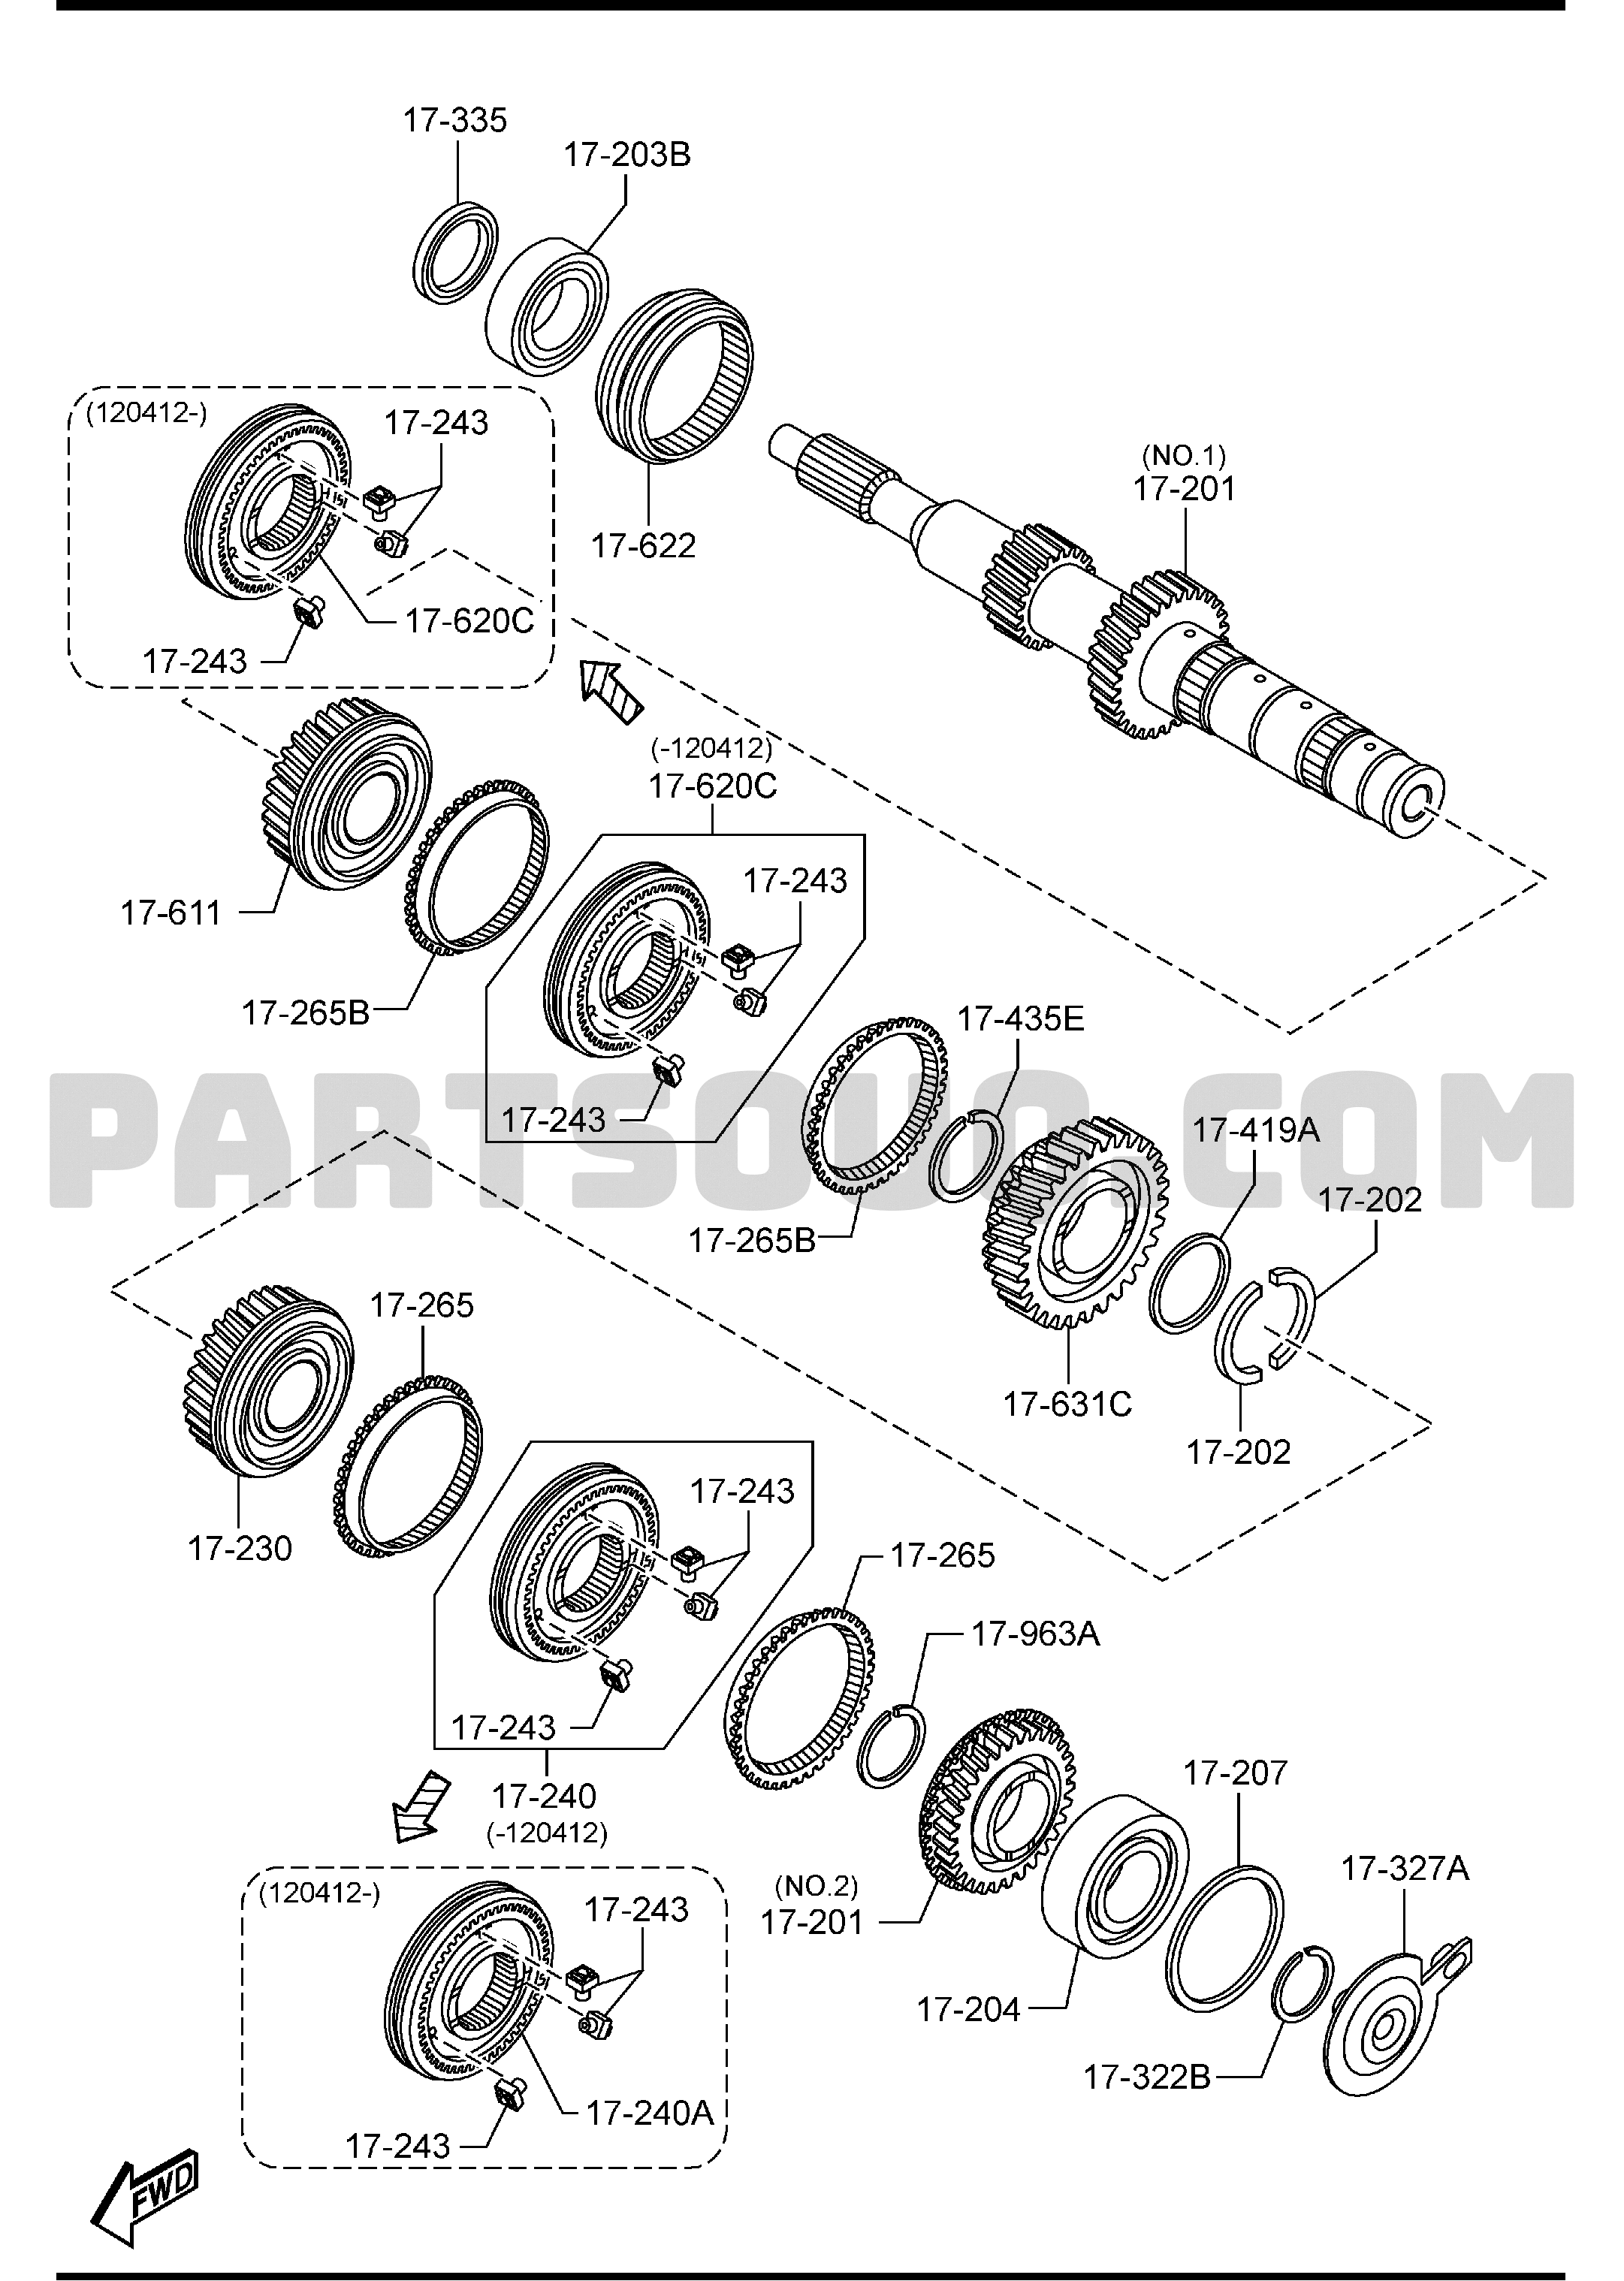 1710A - MANUAL TRANSMISSION GEARS 02/02 | Mazda CX-5 2014 AUKS01 